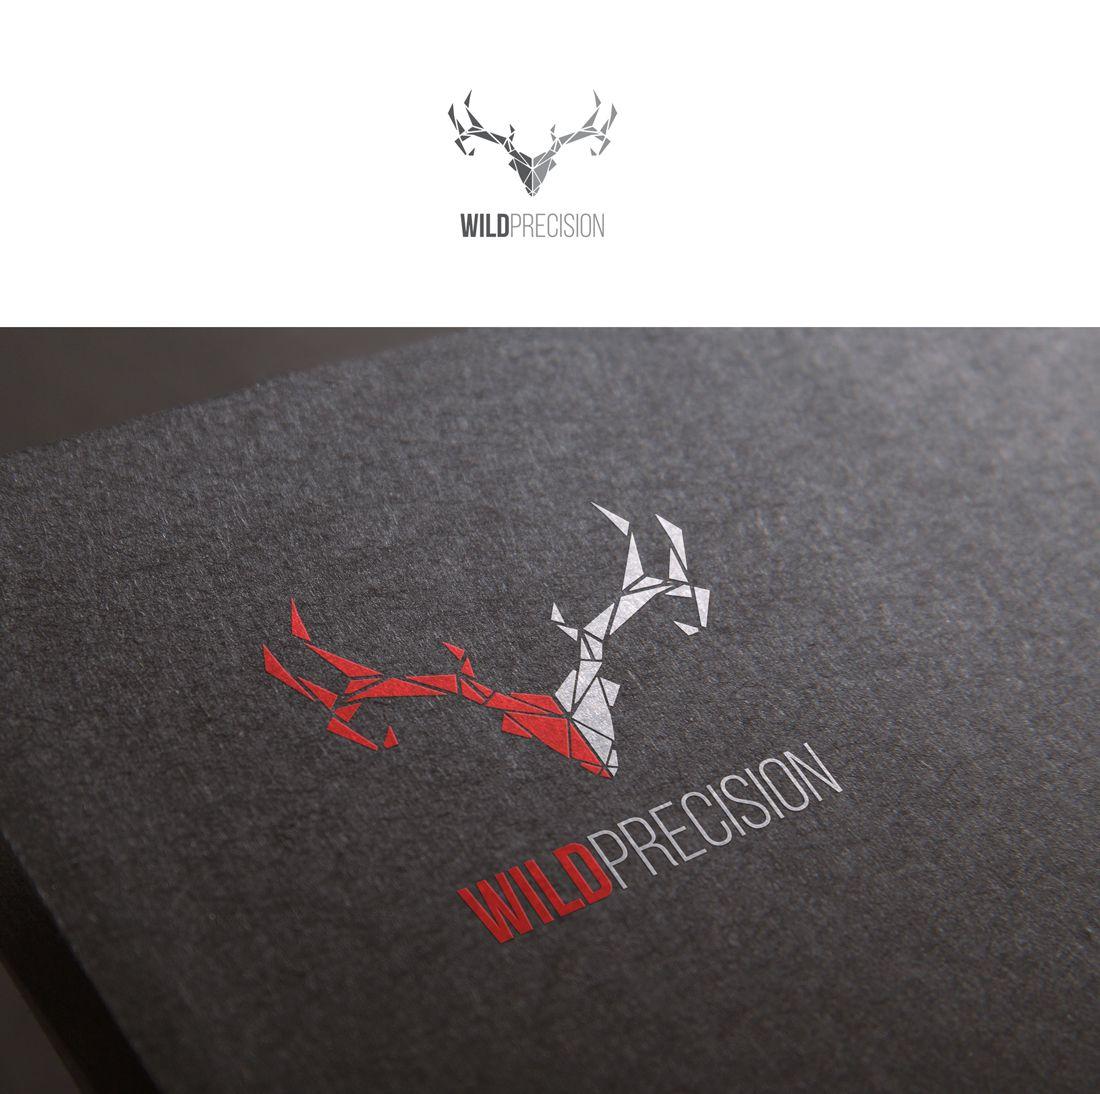 Precision Logo - Serious, Professional, Mechanical Engineering Logo Design for WILD